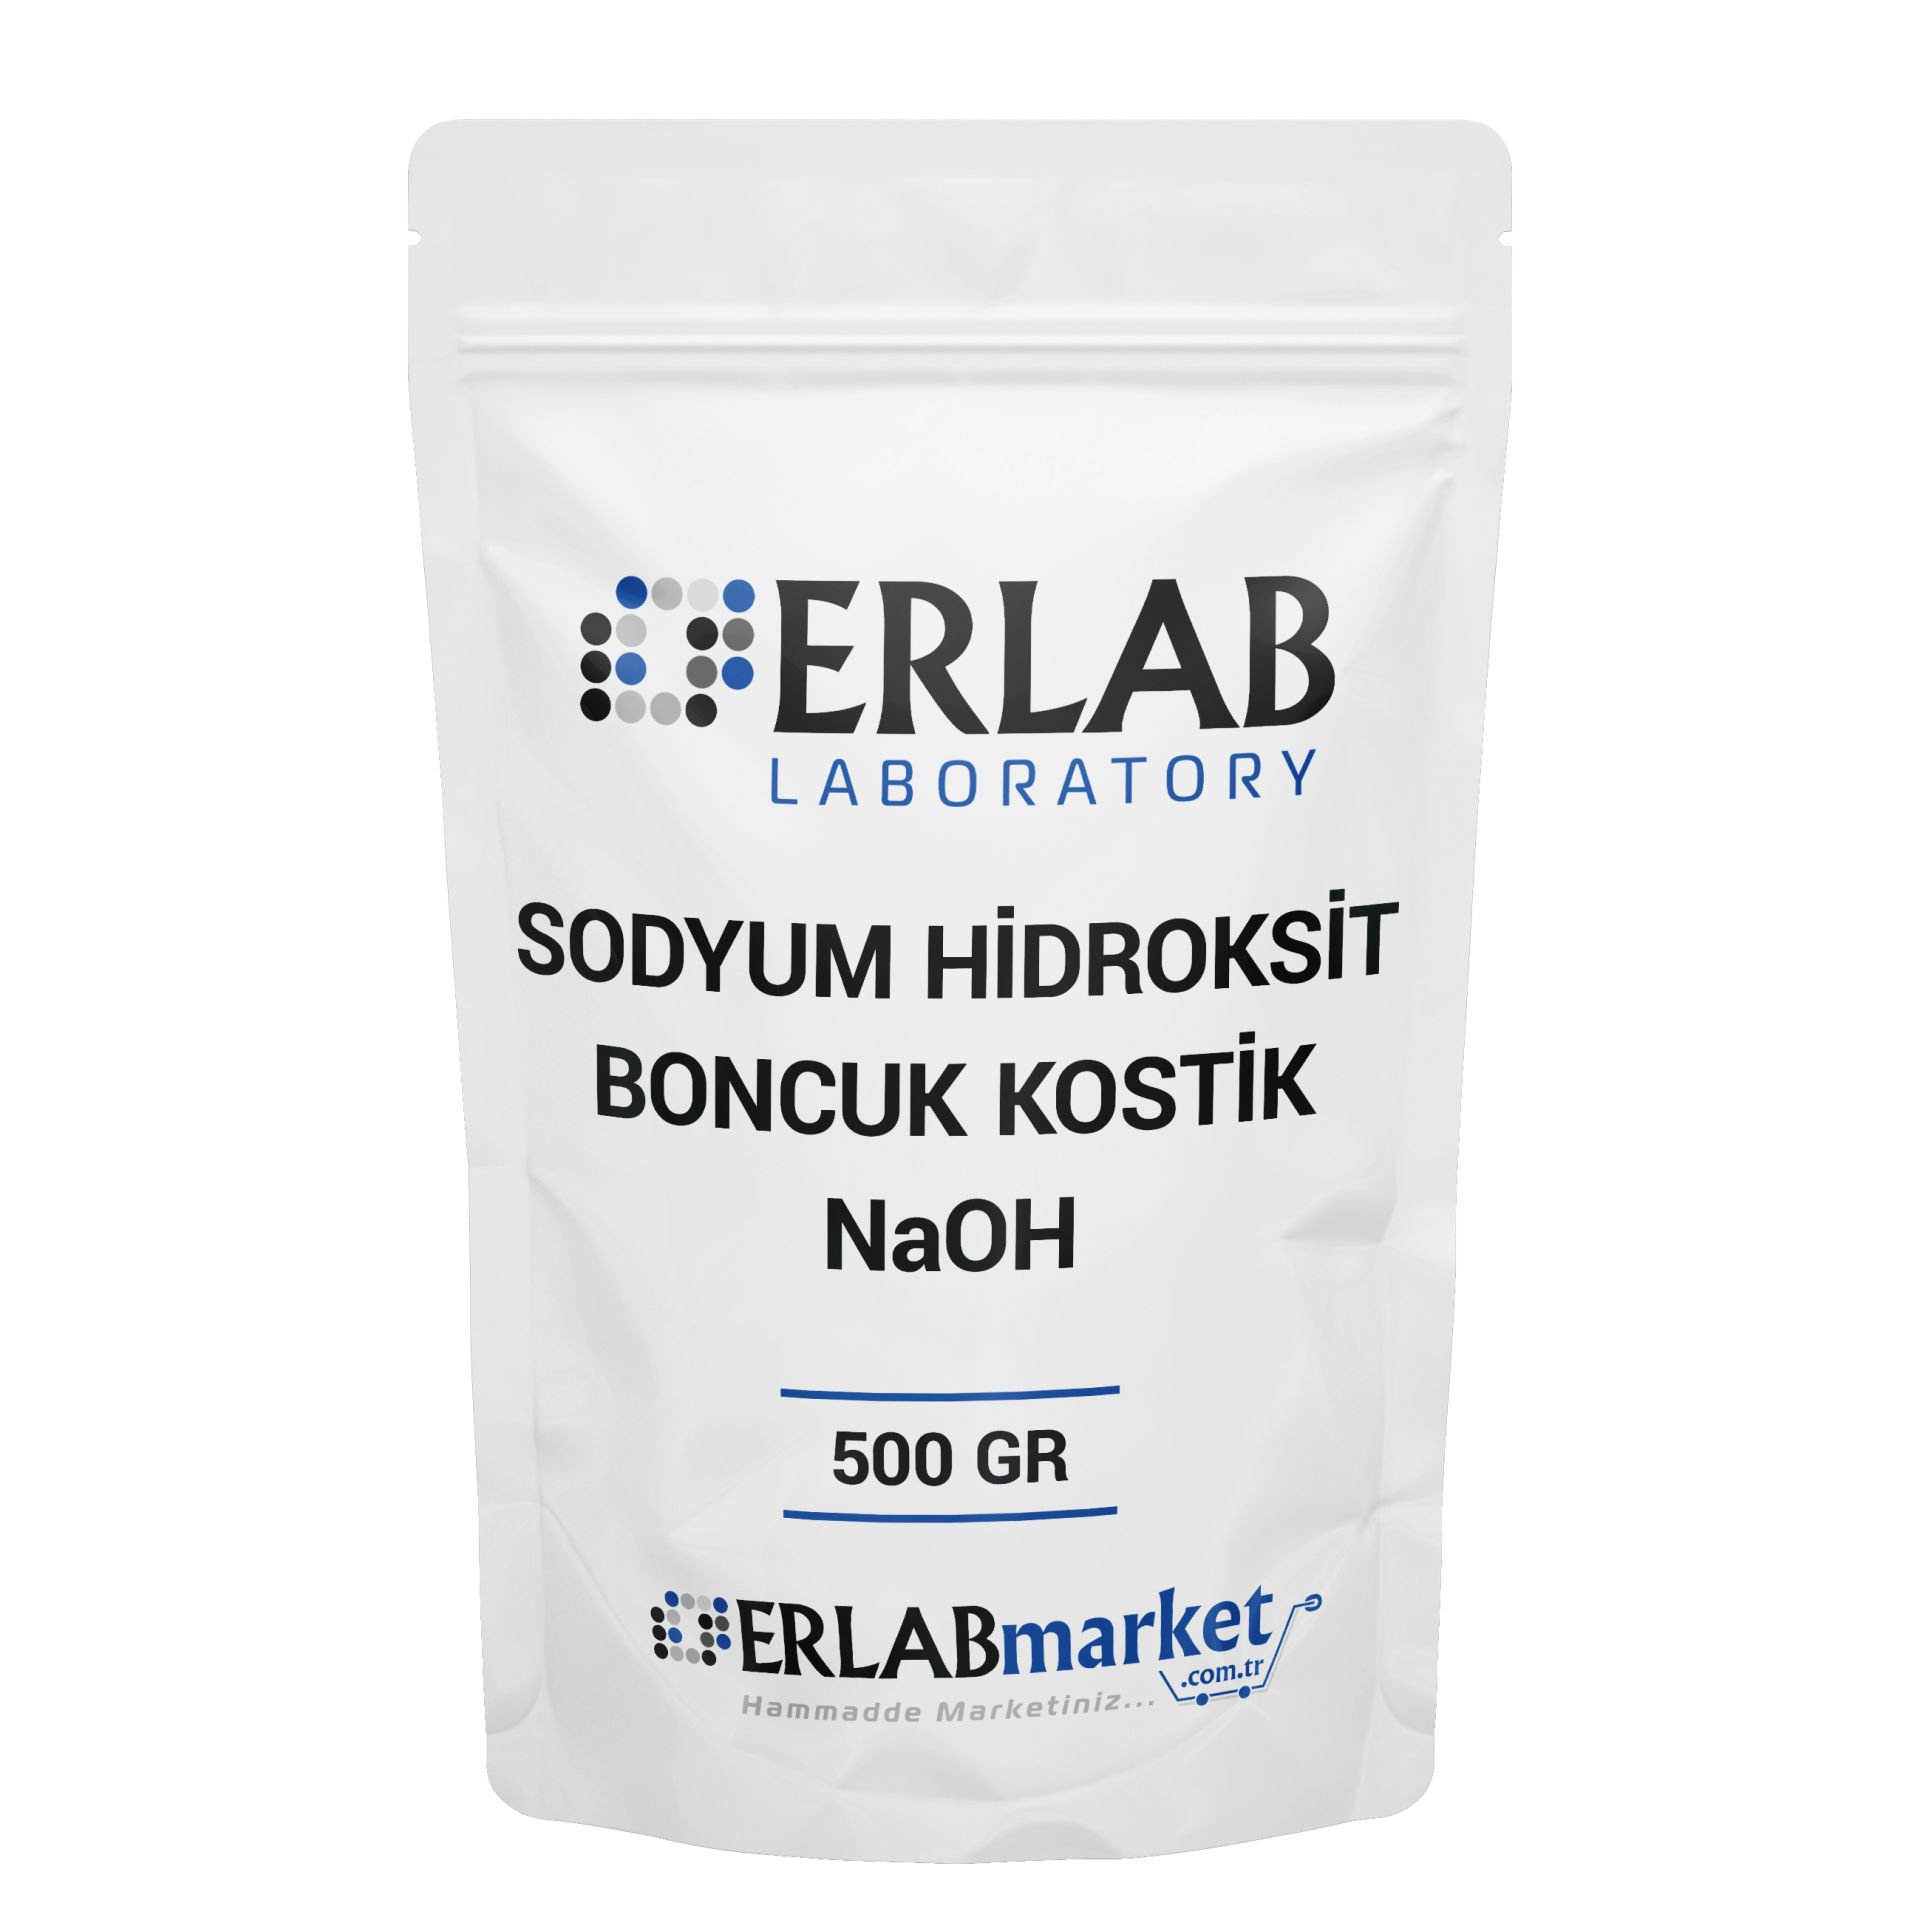 Sodyum Hidroksit Boncuk kostik 500 GRAM - Kostik - Sodium Hydroxide